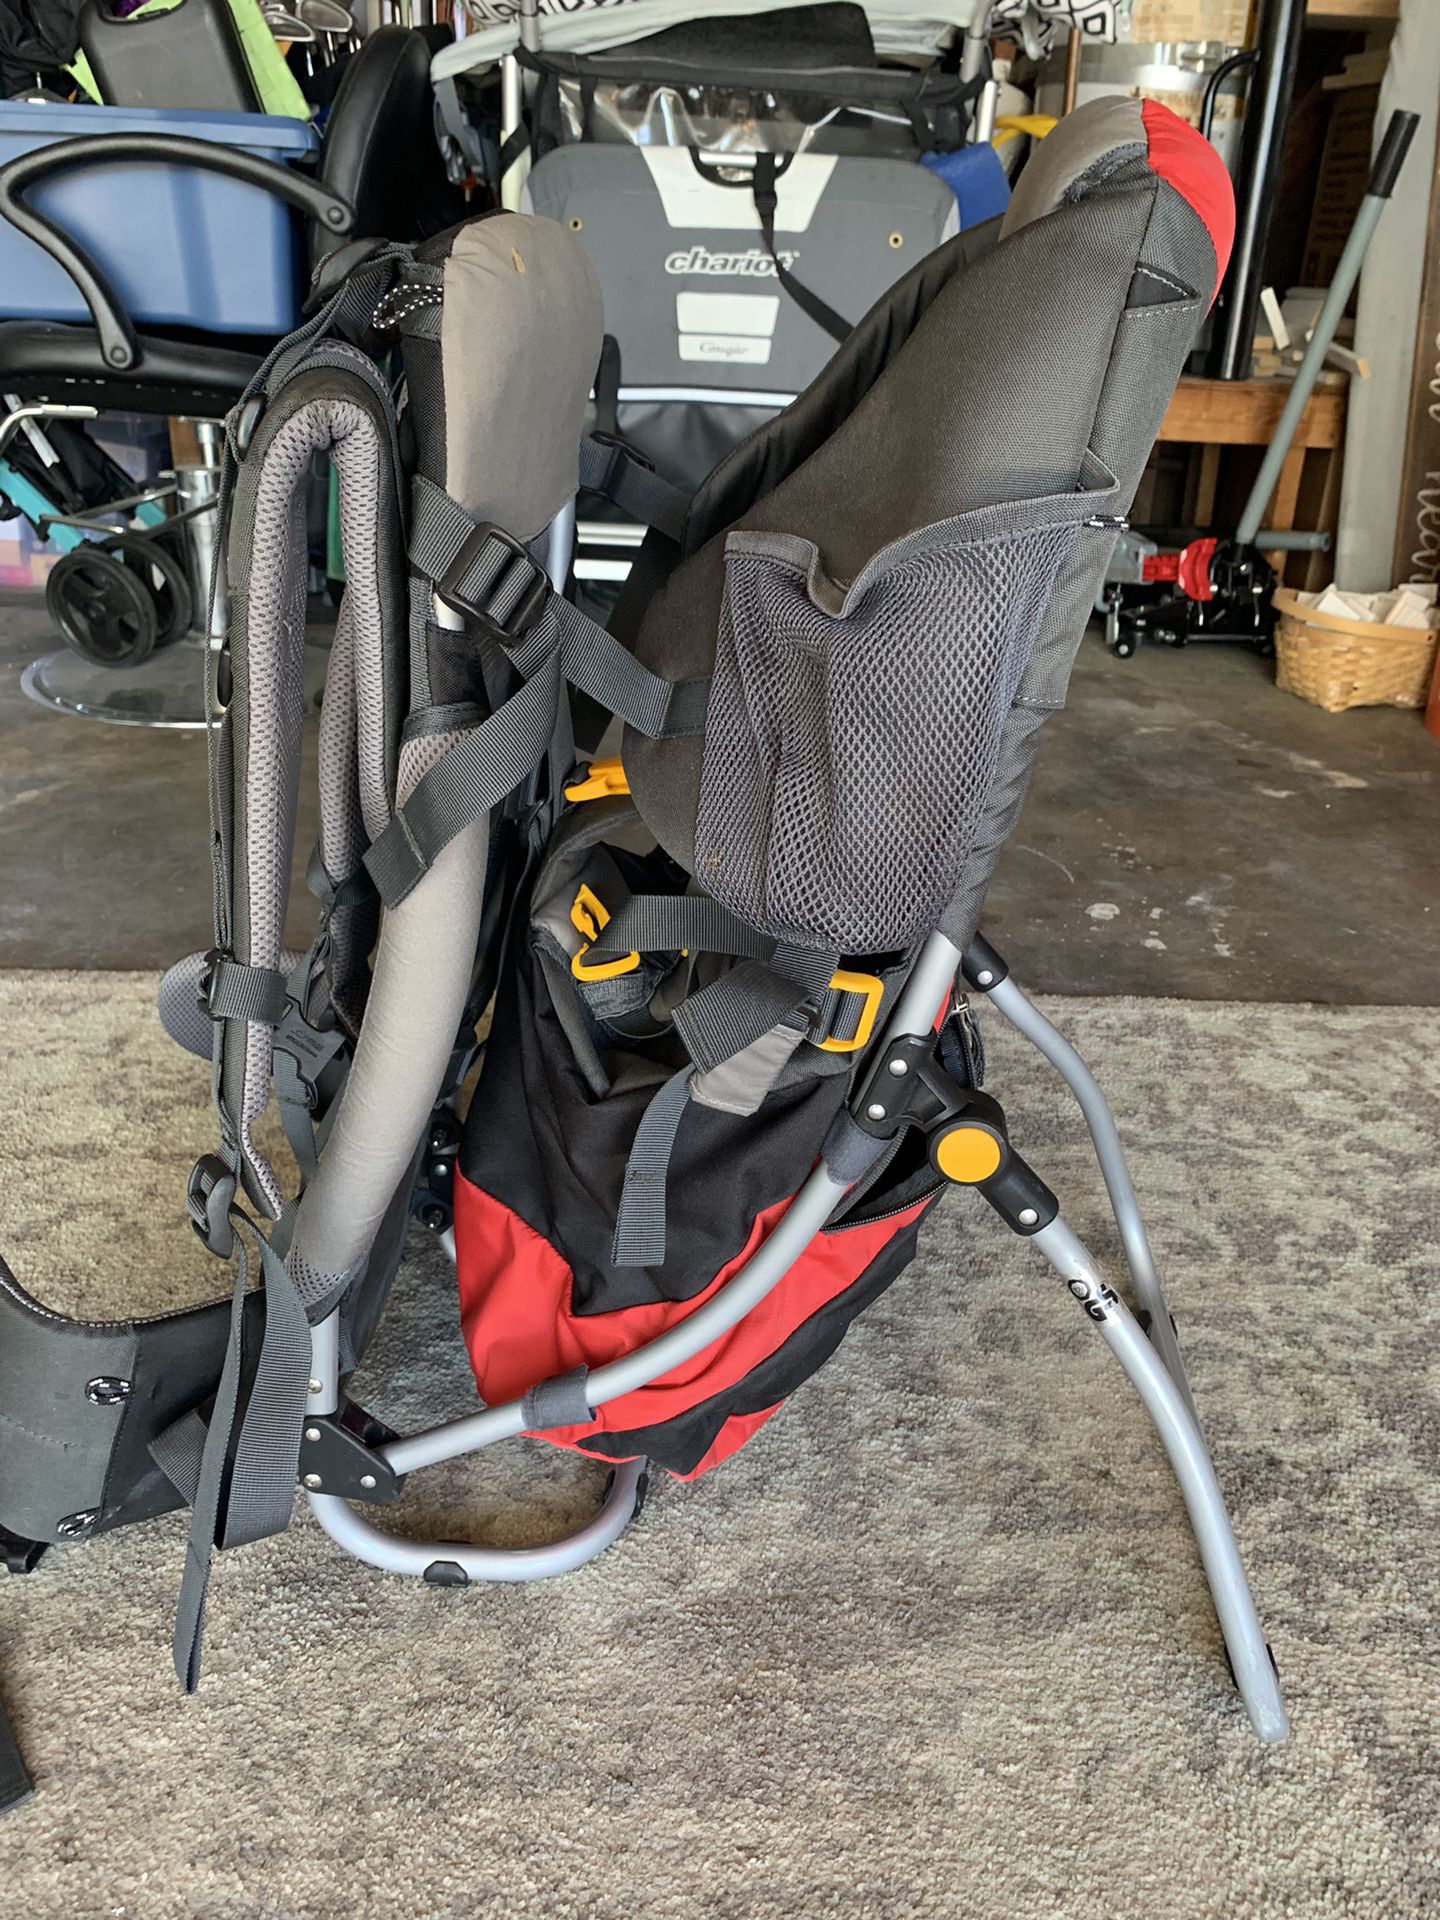 Deuter Premium Hiking Backpack Child Carrier